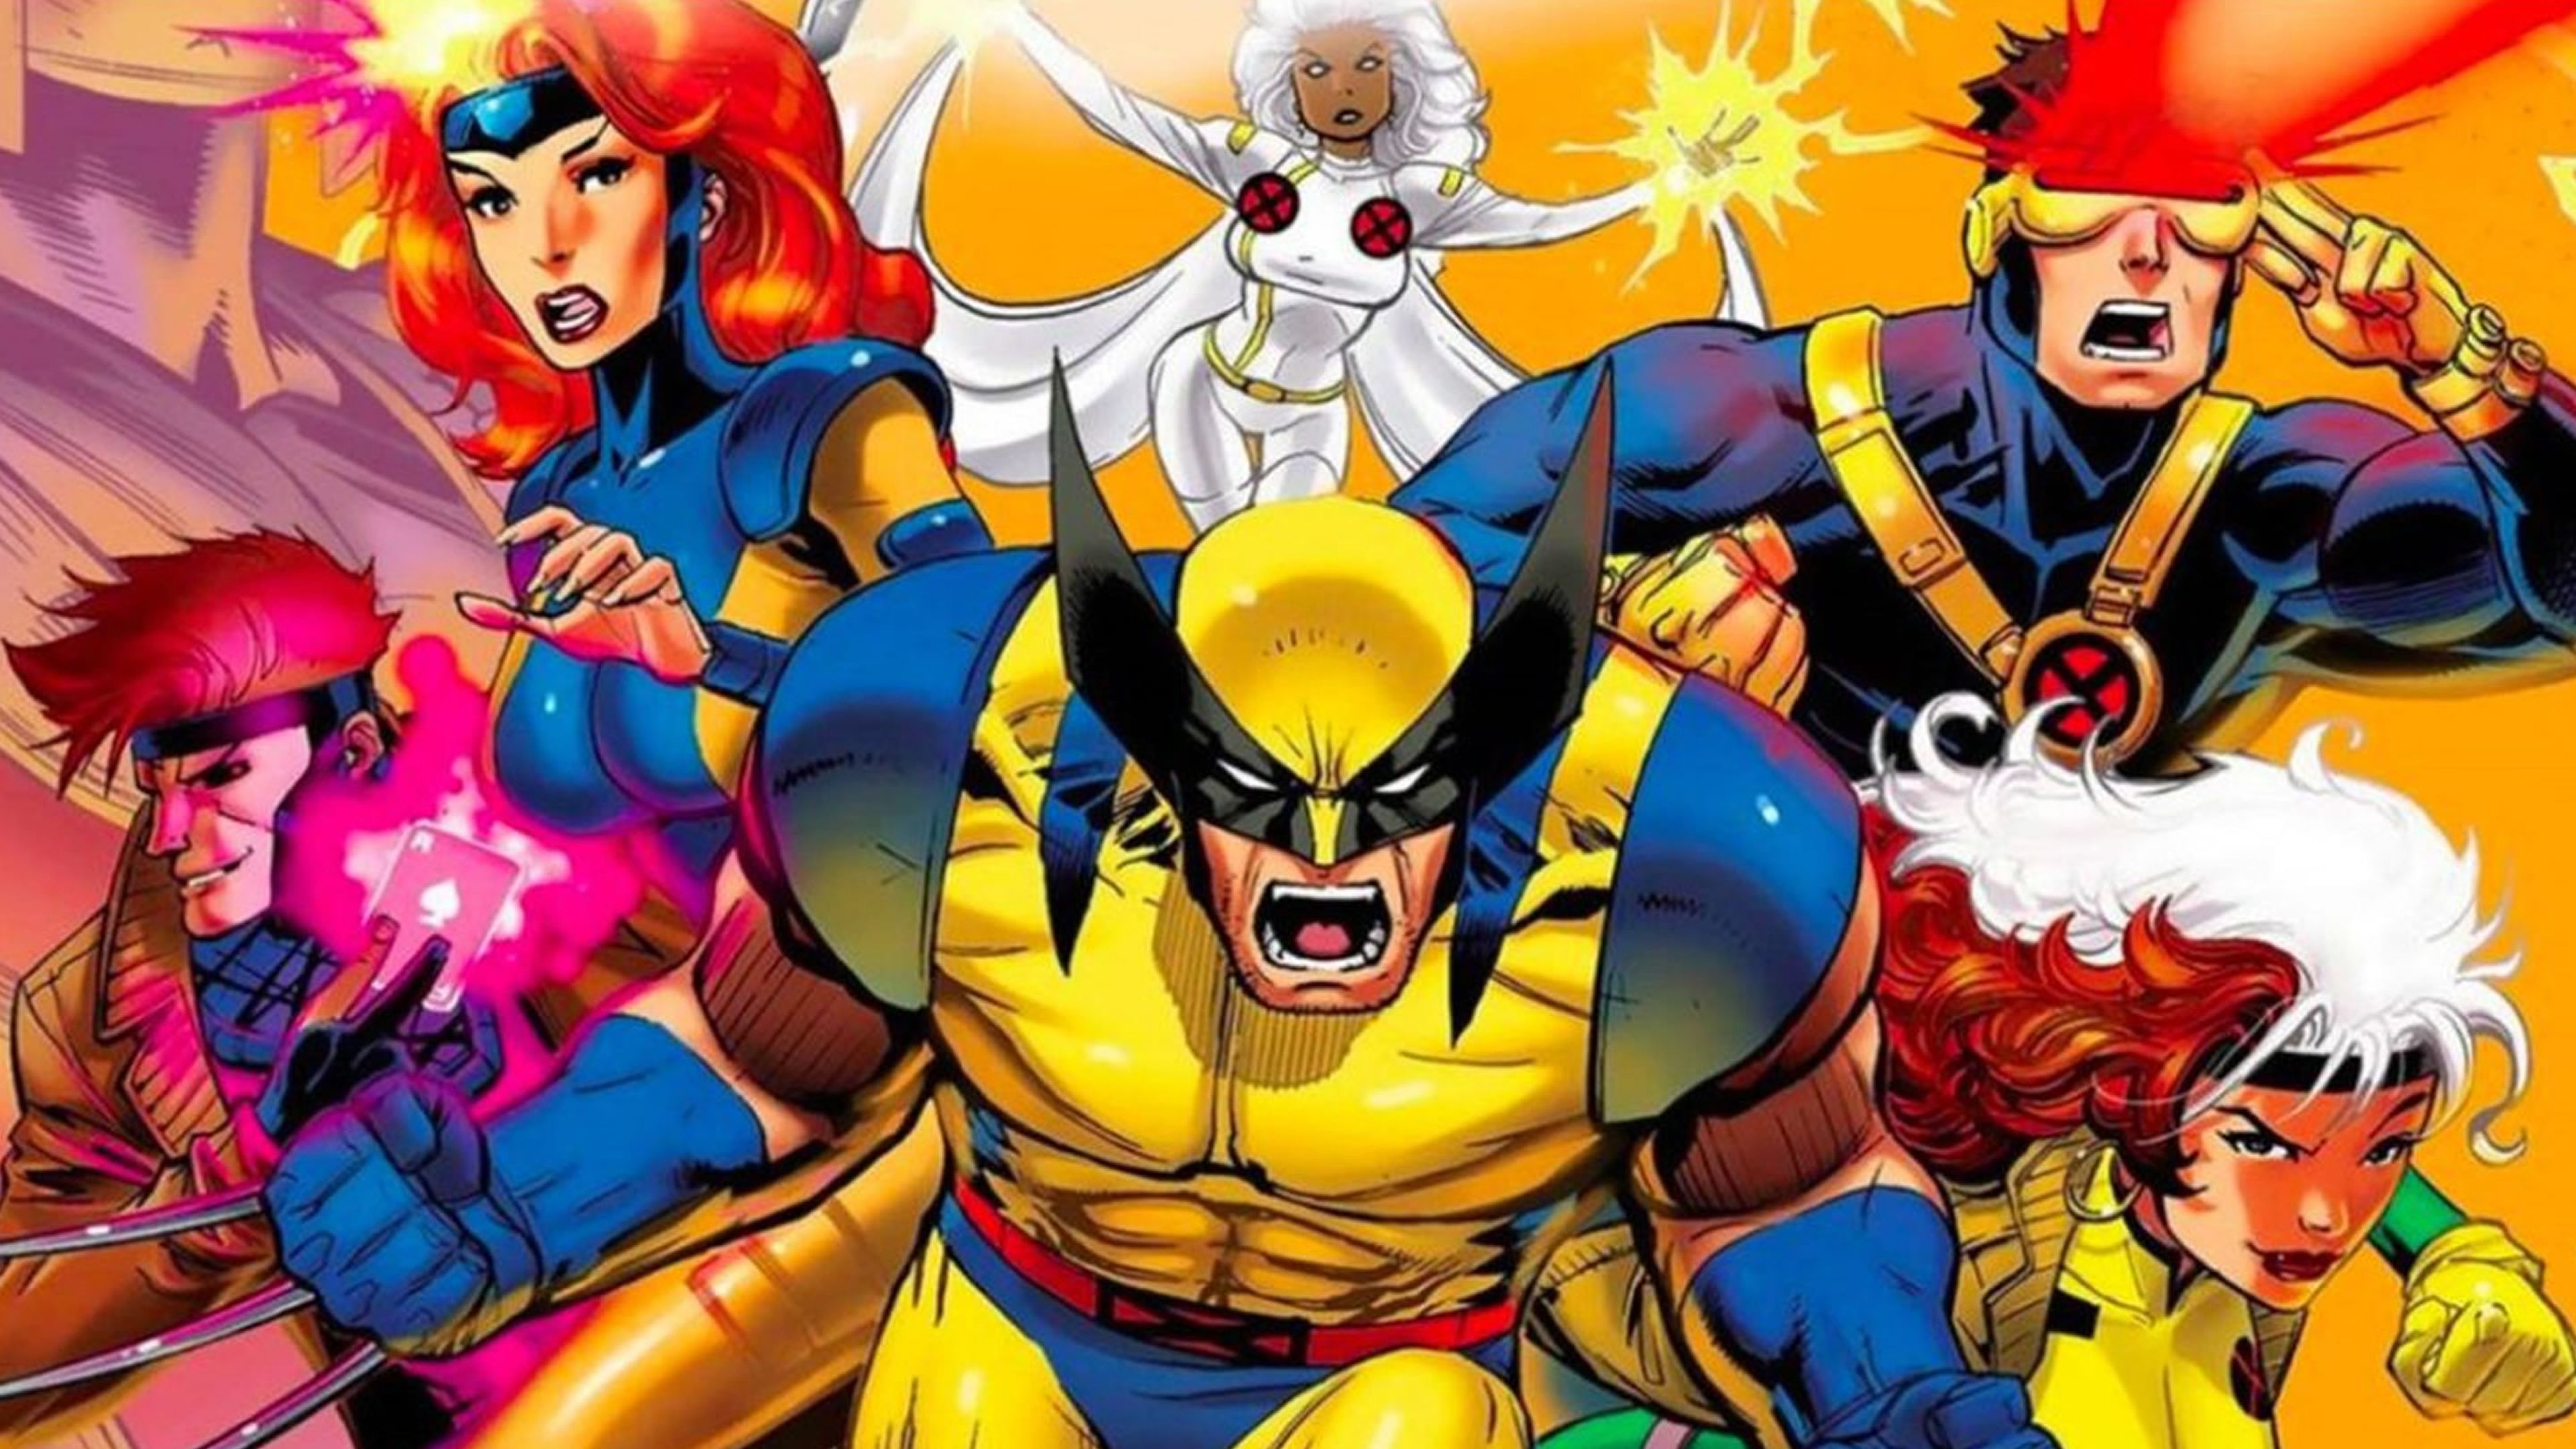 X-Men: The animated series